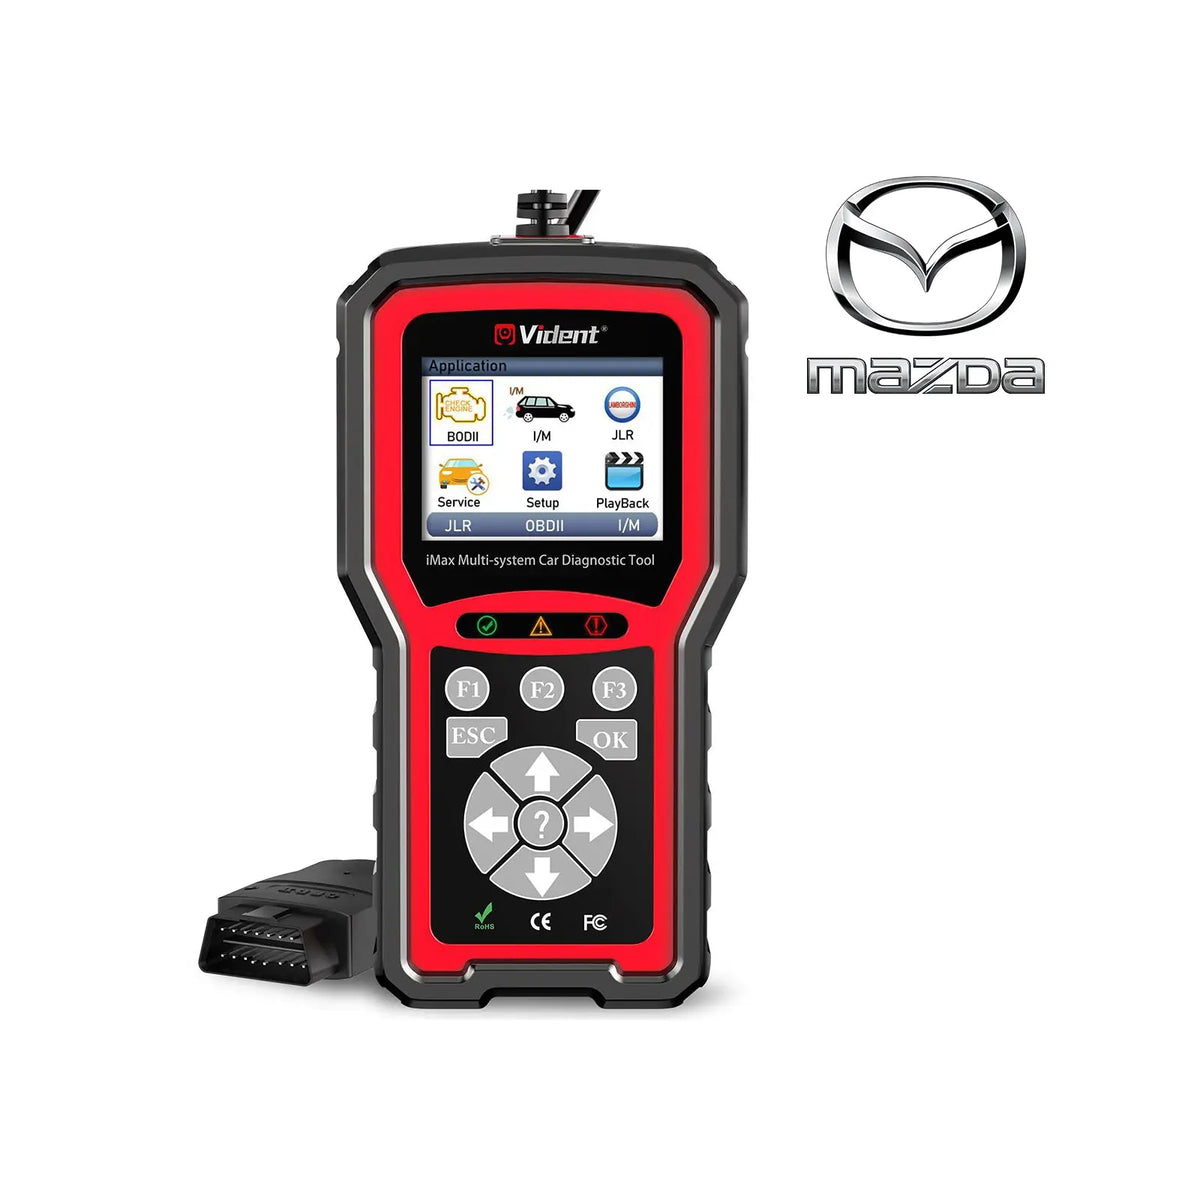 iMax4318 Mazda Multi-System Car Diagnostic Tool Vident